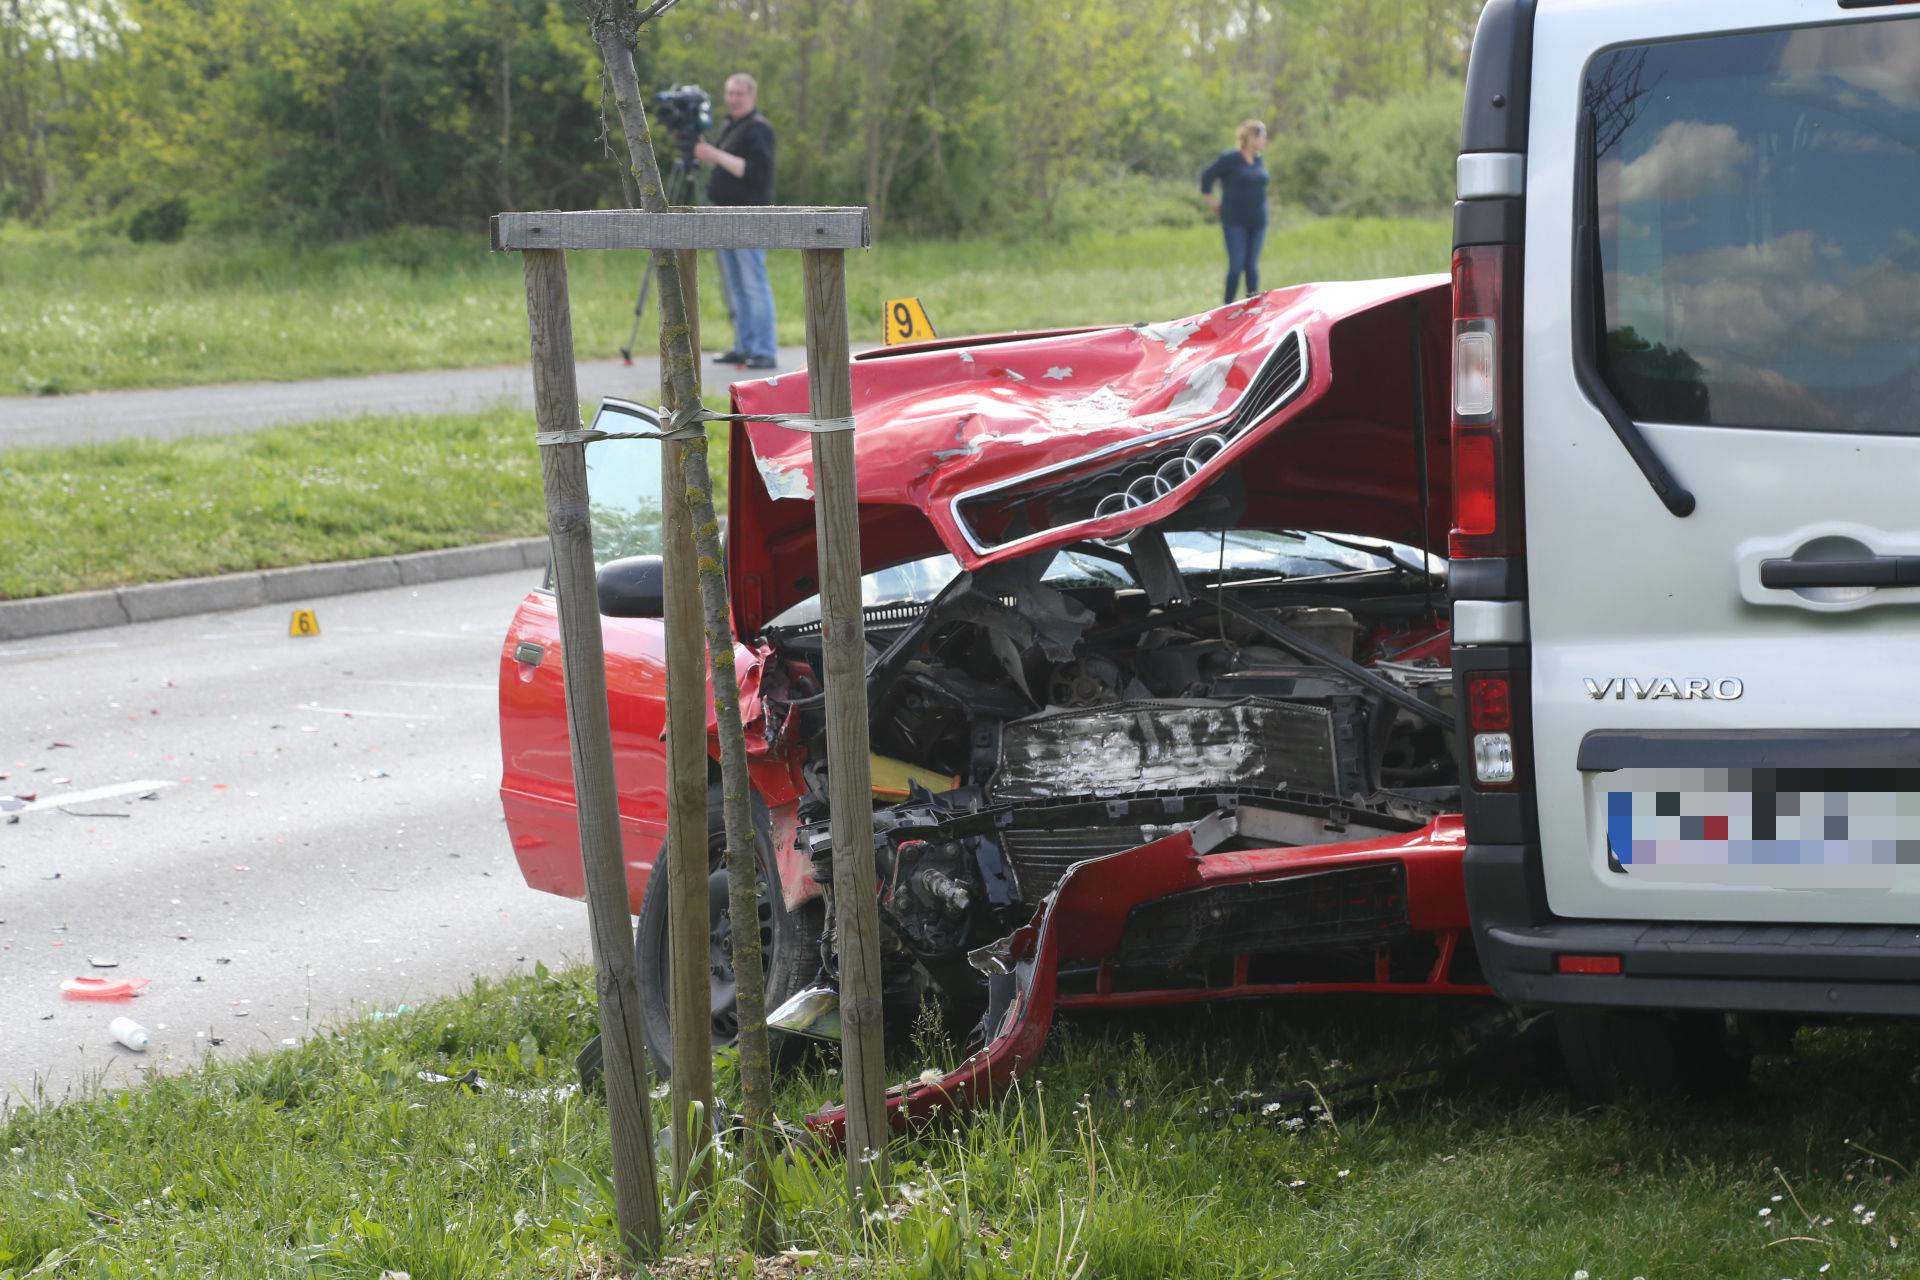 Vozačica preminula od ozljeda: Vozio je prebrzo i bio je pijan...